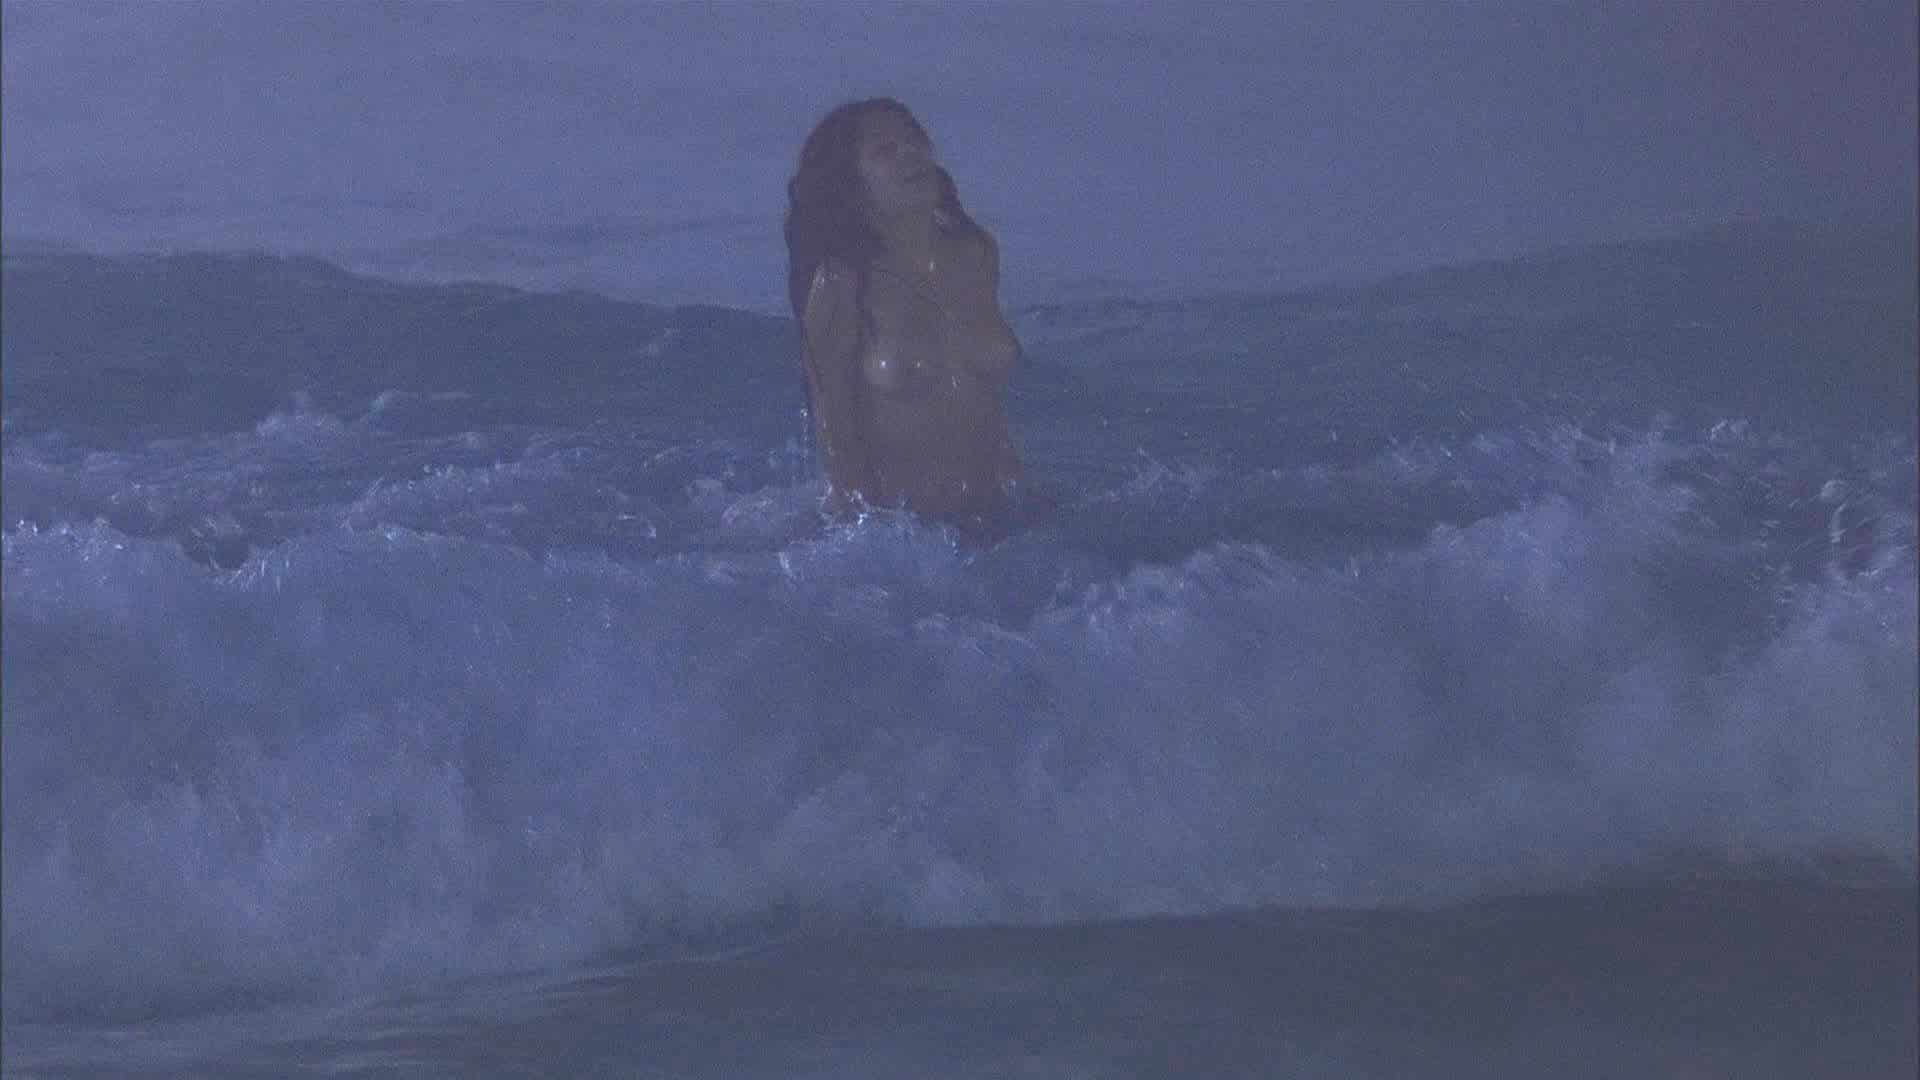 nude scene of salma hayek at night in the ocean